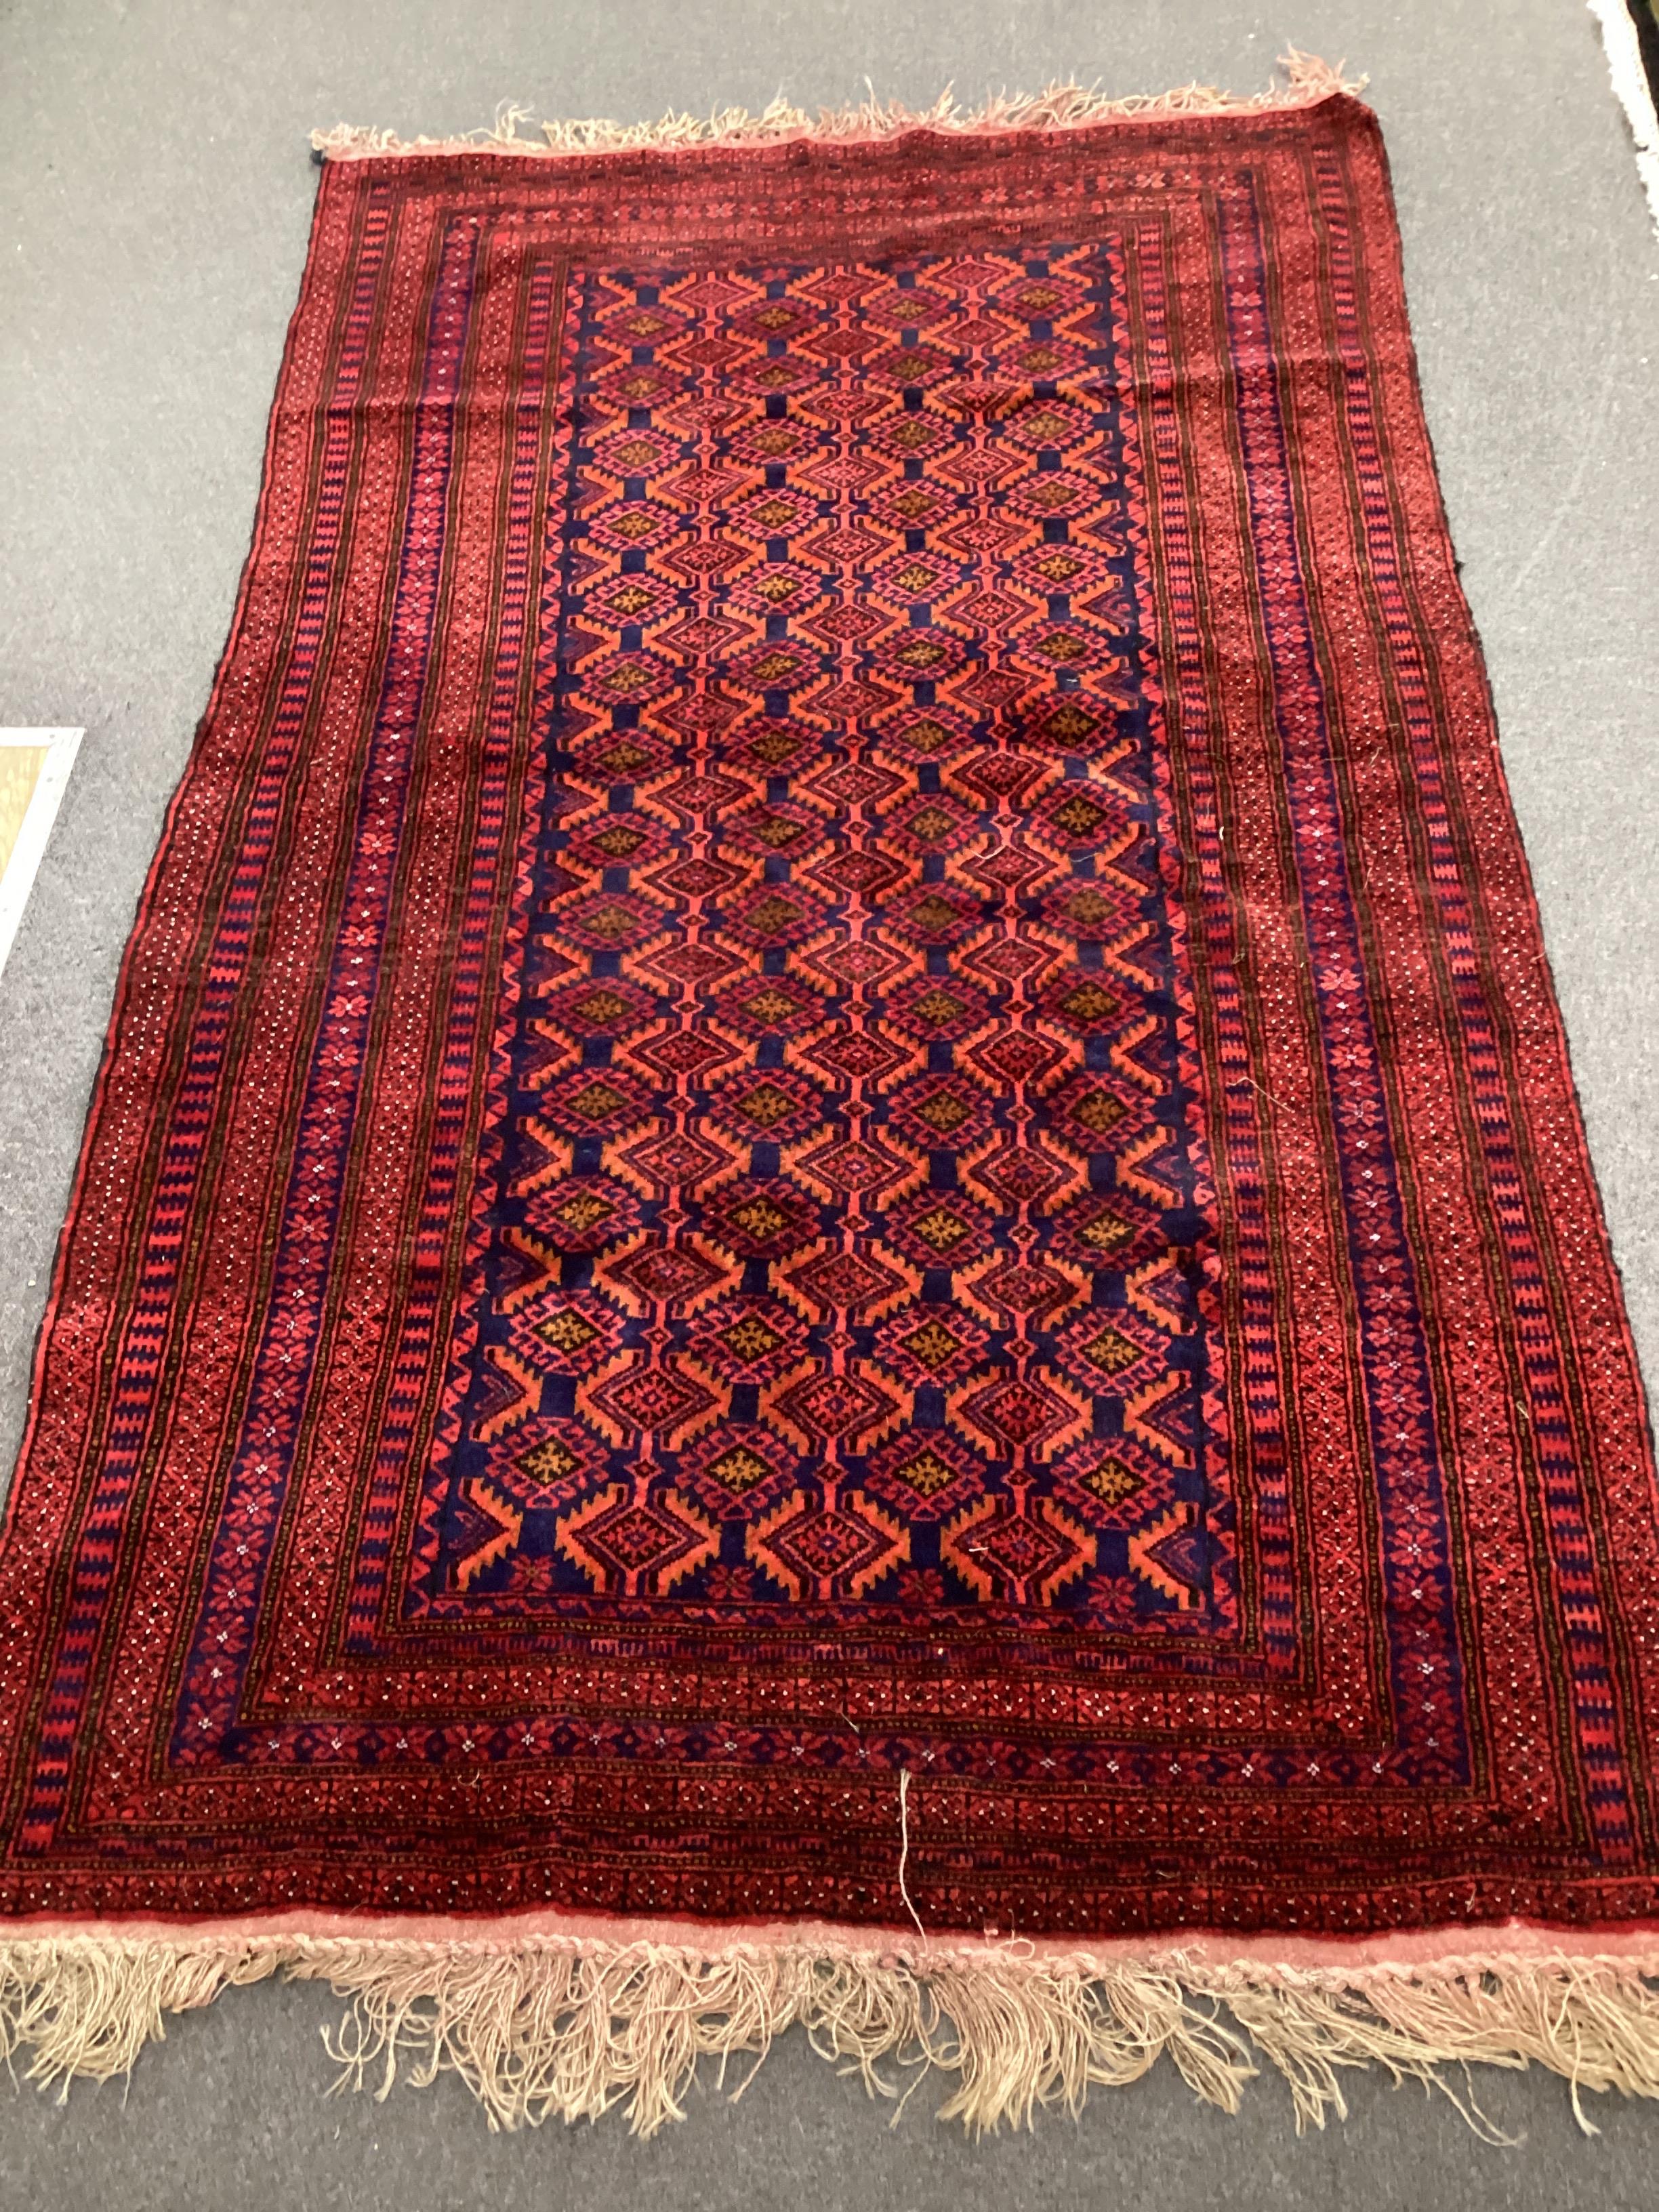 An Afghan blue ground rug, 216cm x 130cm